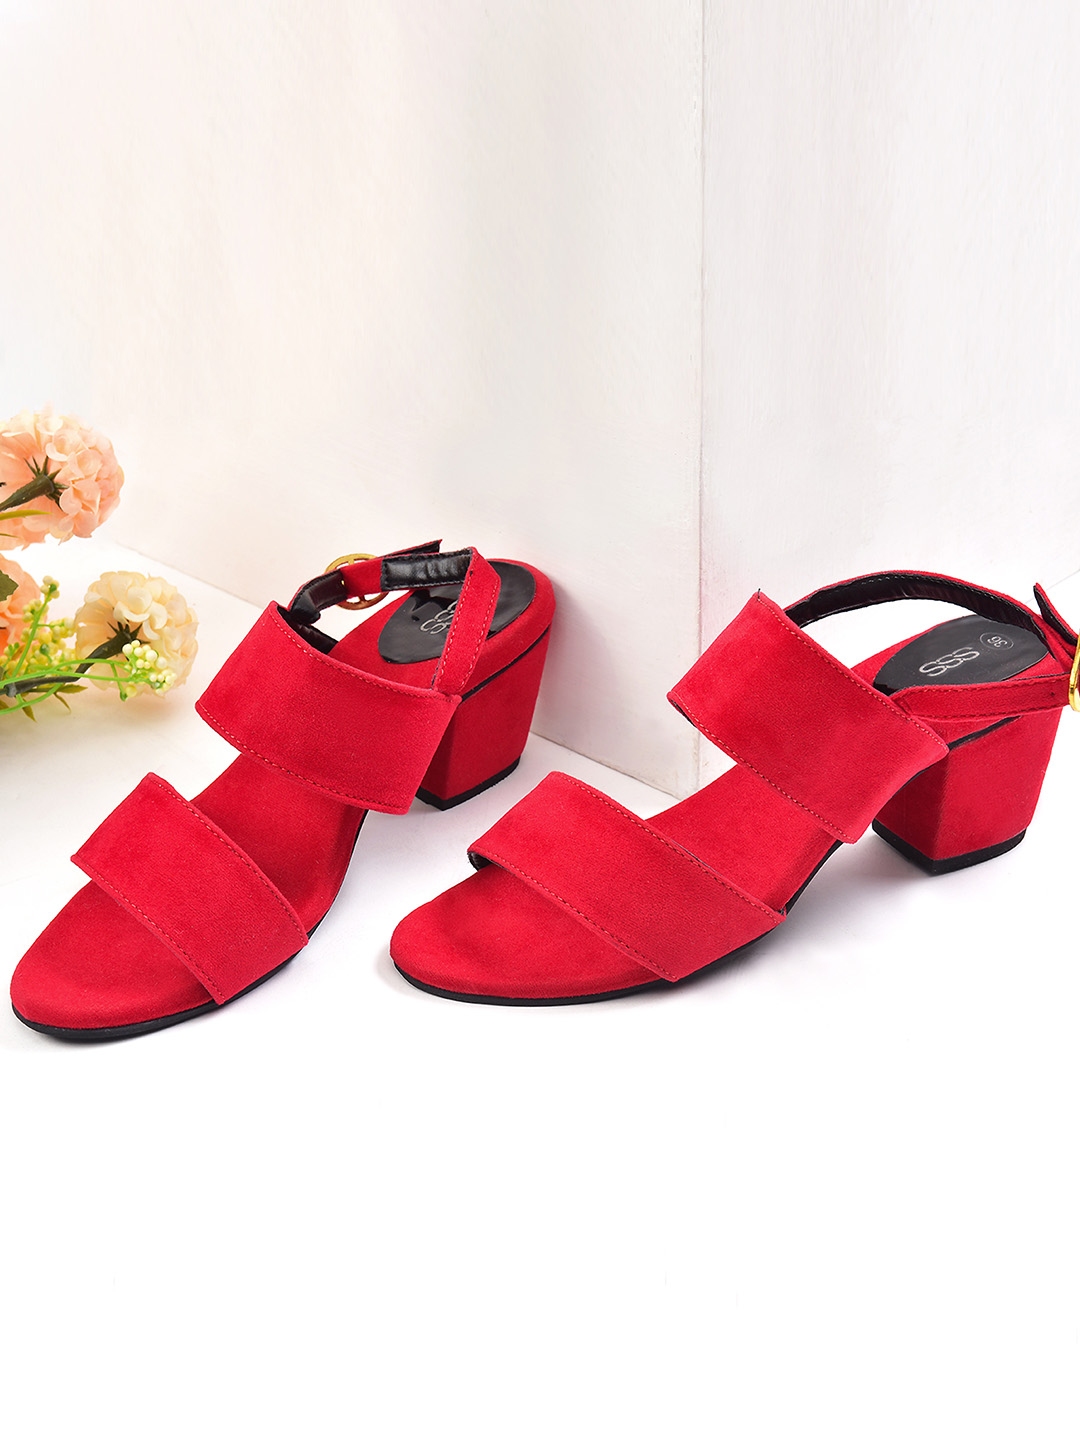 red heels in store